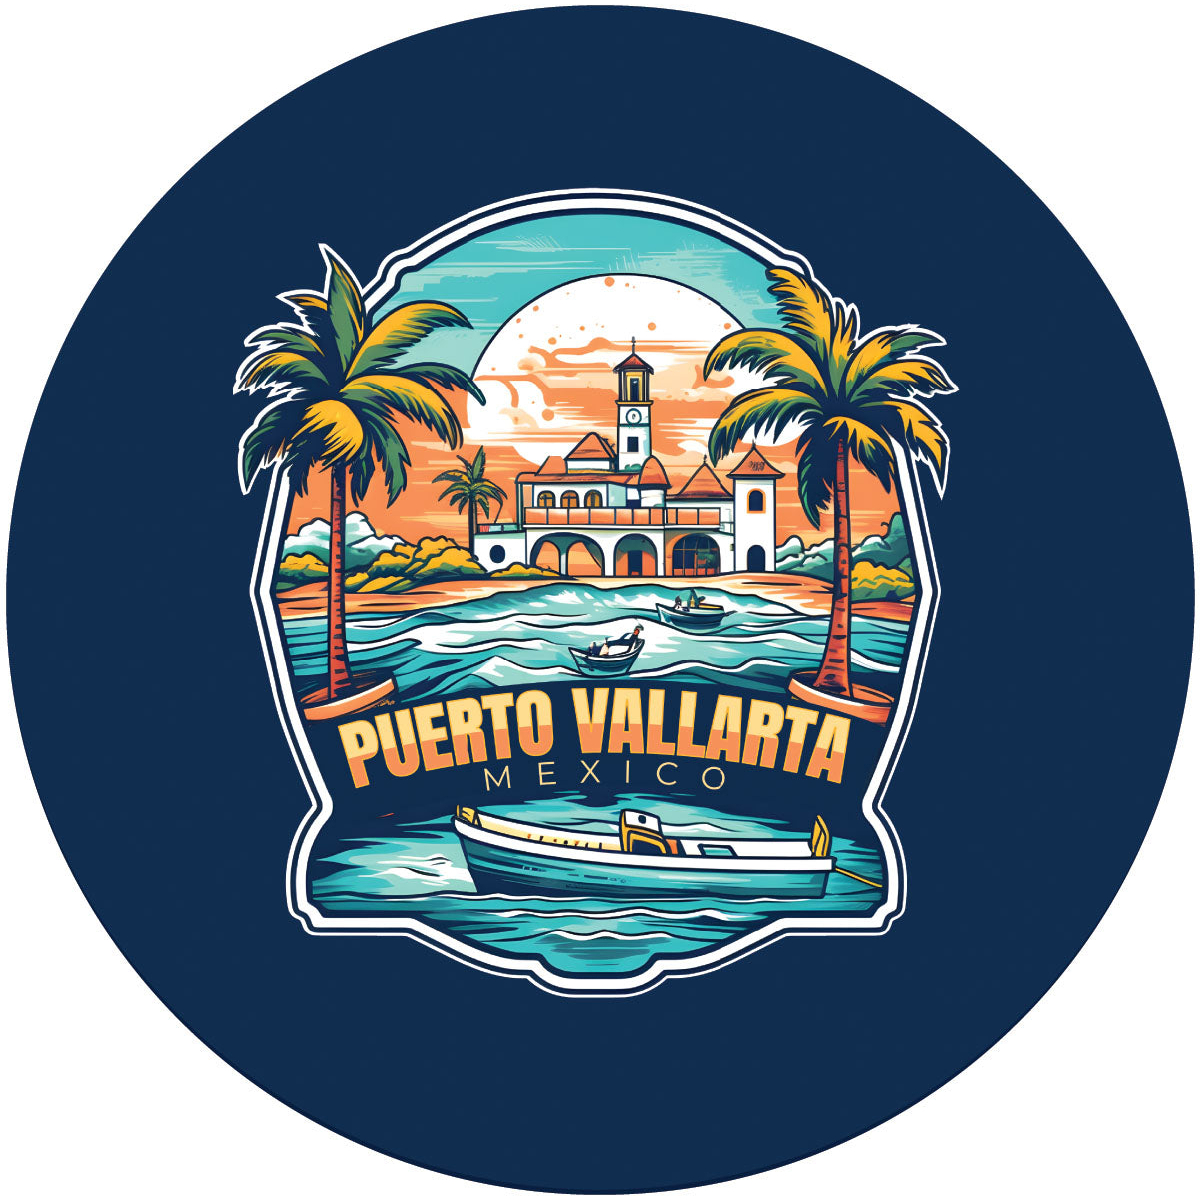 Puerto Vallarta Mexico Design A Souvenir Round Vinyl Decal Sticker - 4-Inch